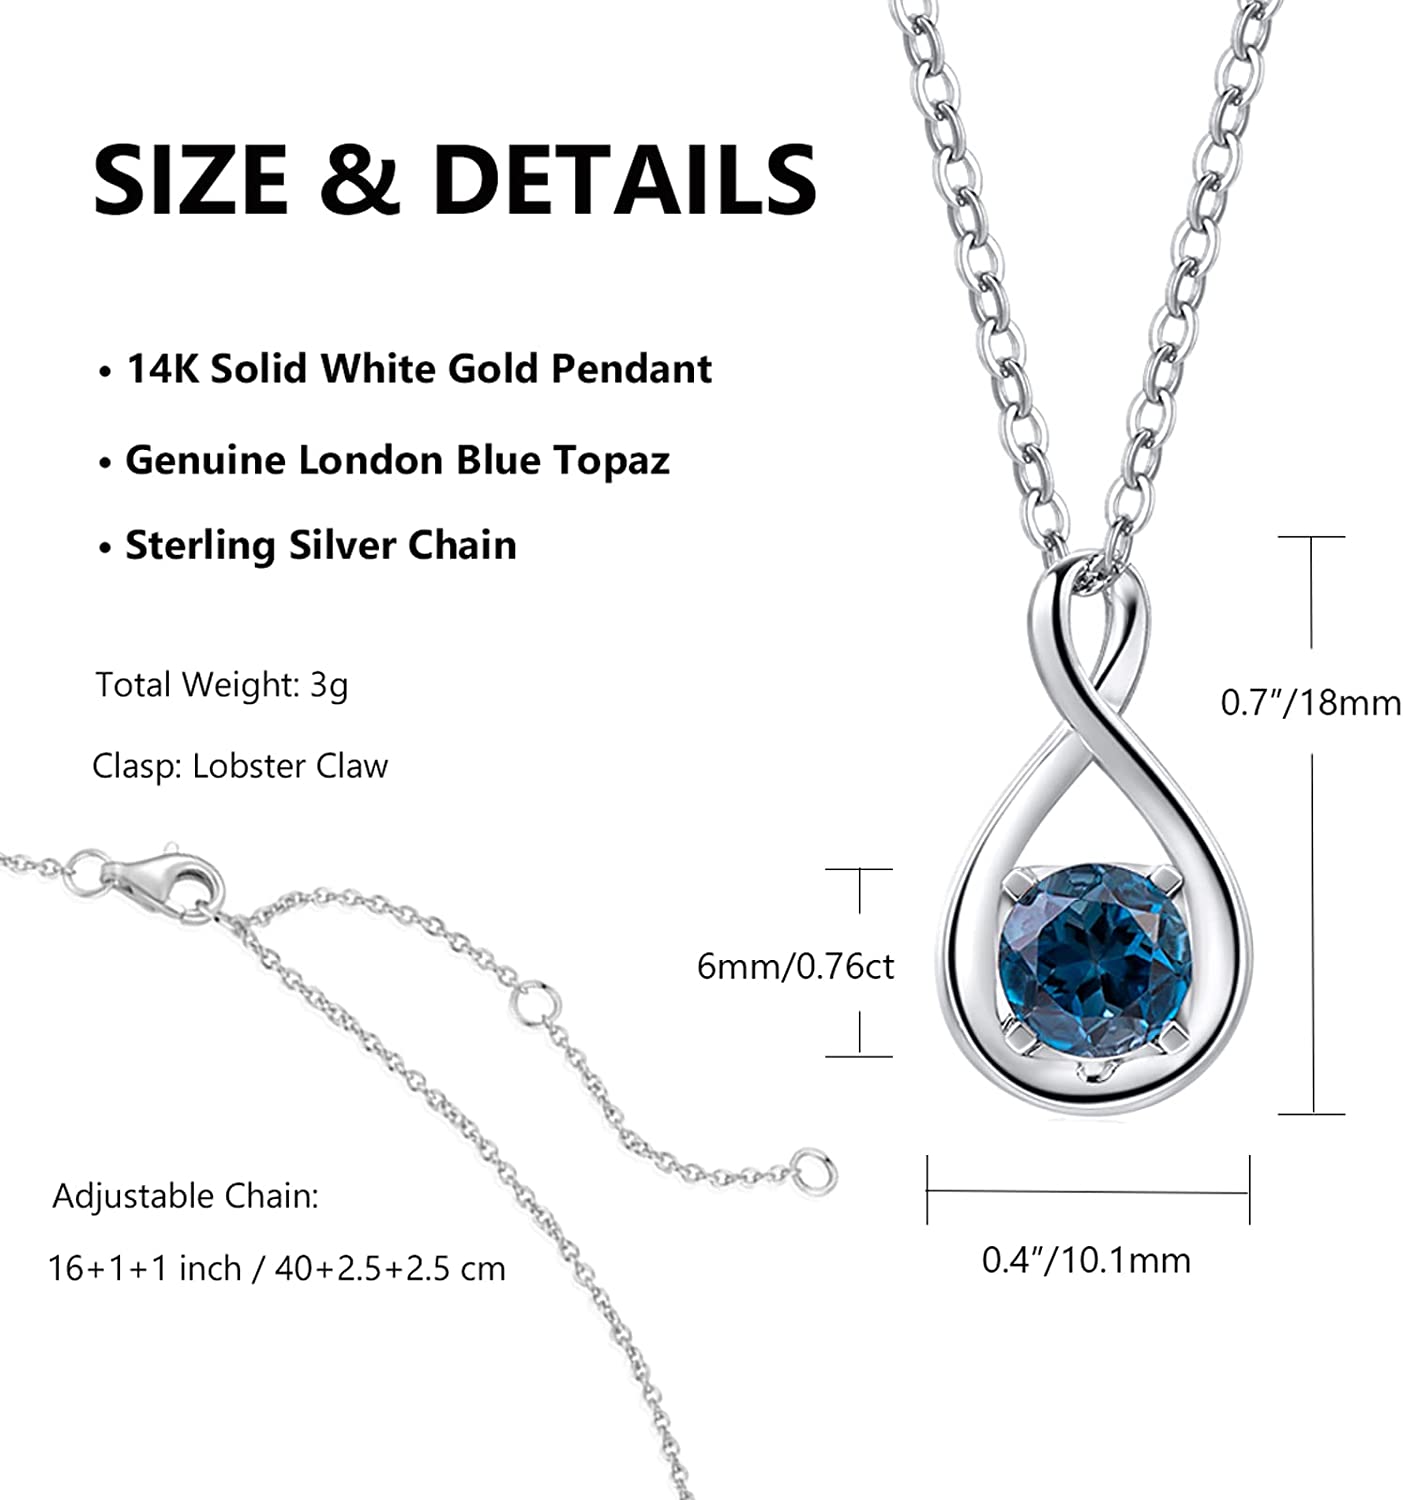 FANCIME "Birthstone" December Gemstone Sterling Silver Necklace Size